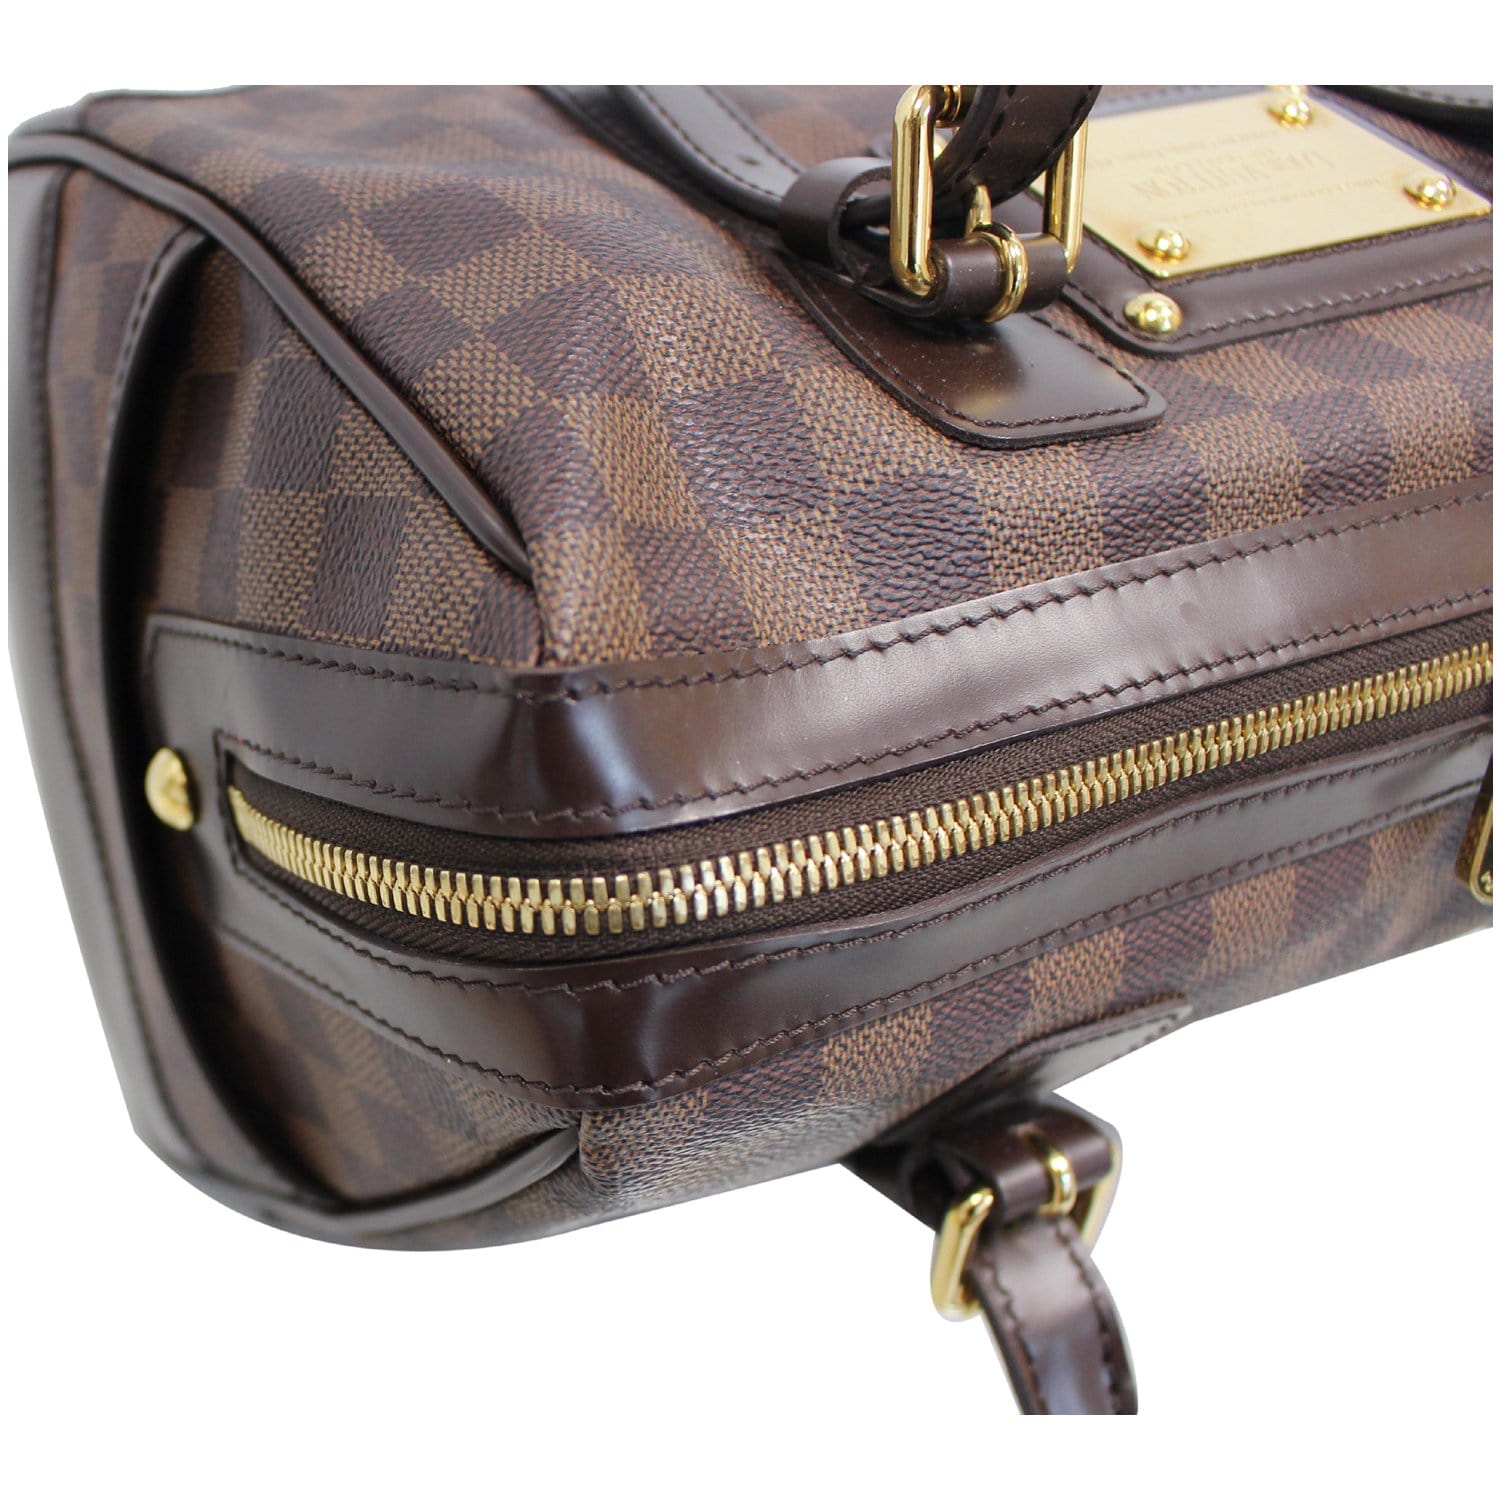 Berkeley leather handbag Louis Vuitton Brown in Leather - 21868689